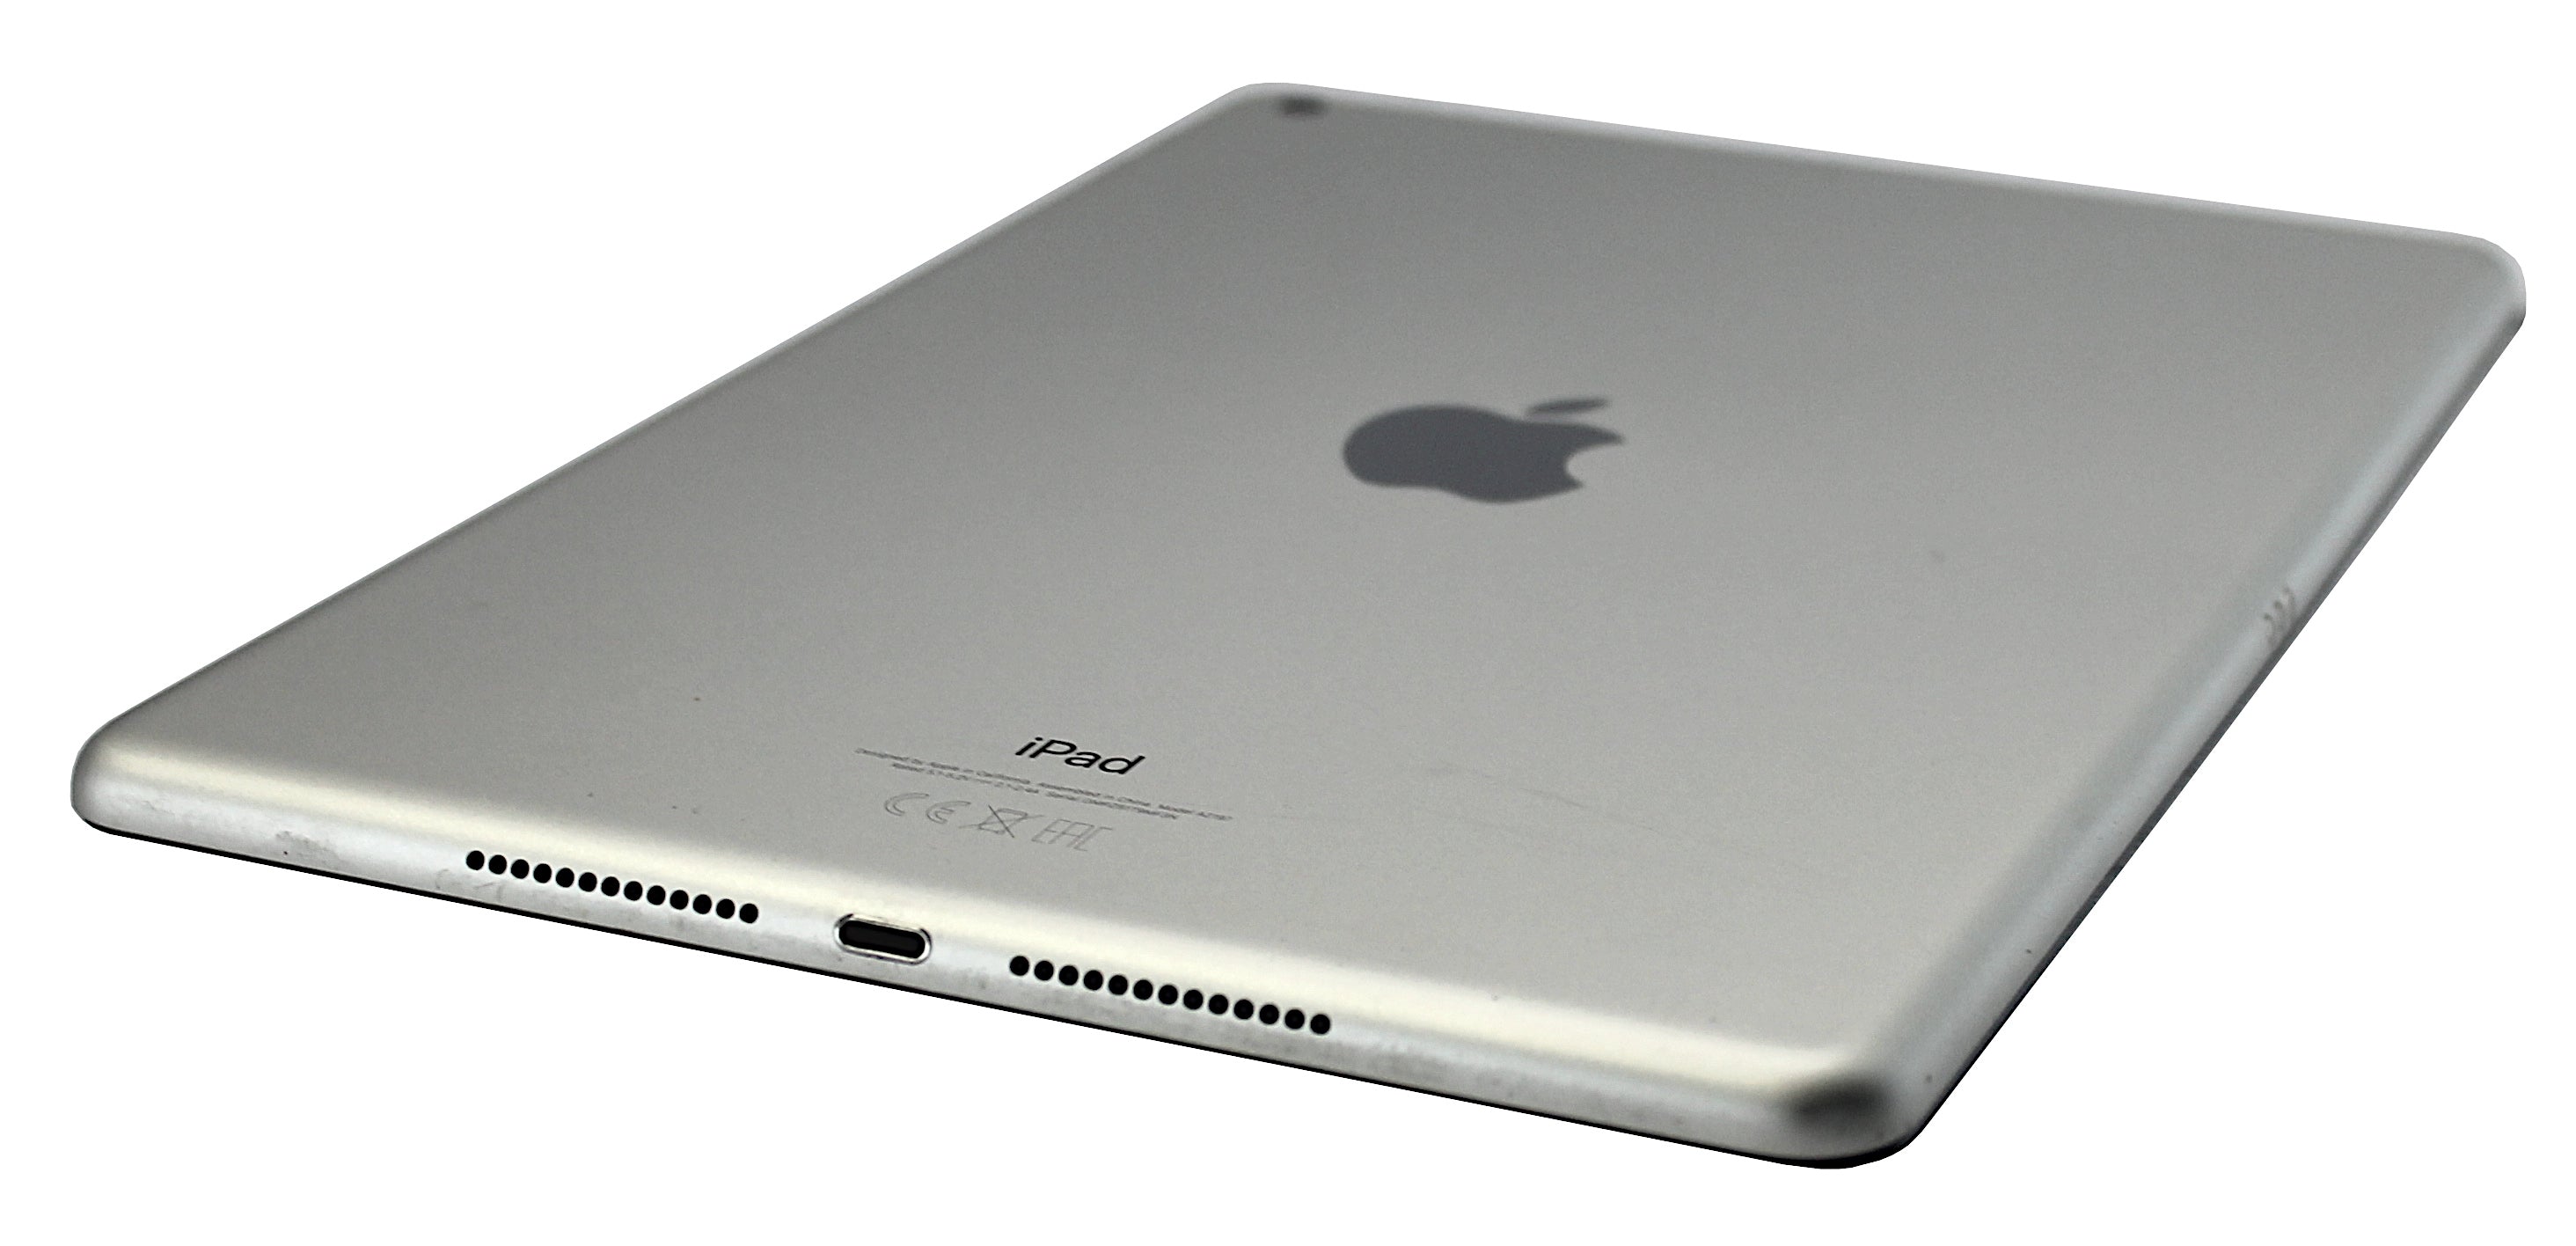 Apple iPad 7th Generation Tablet, 32GB, WiFi, Silver, A2197